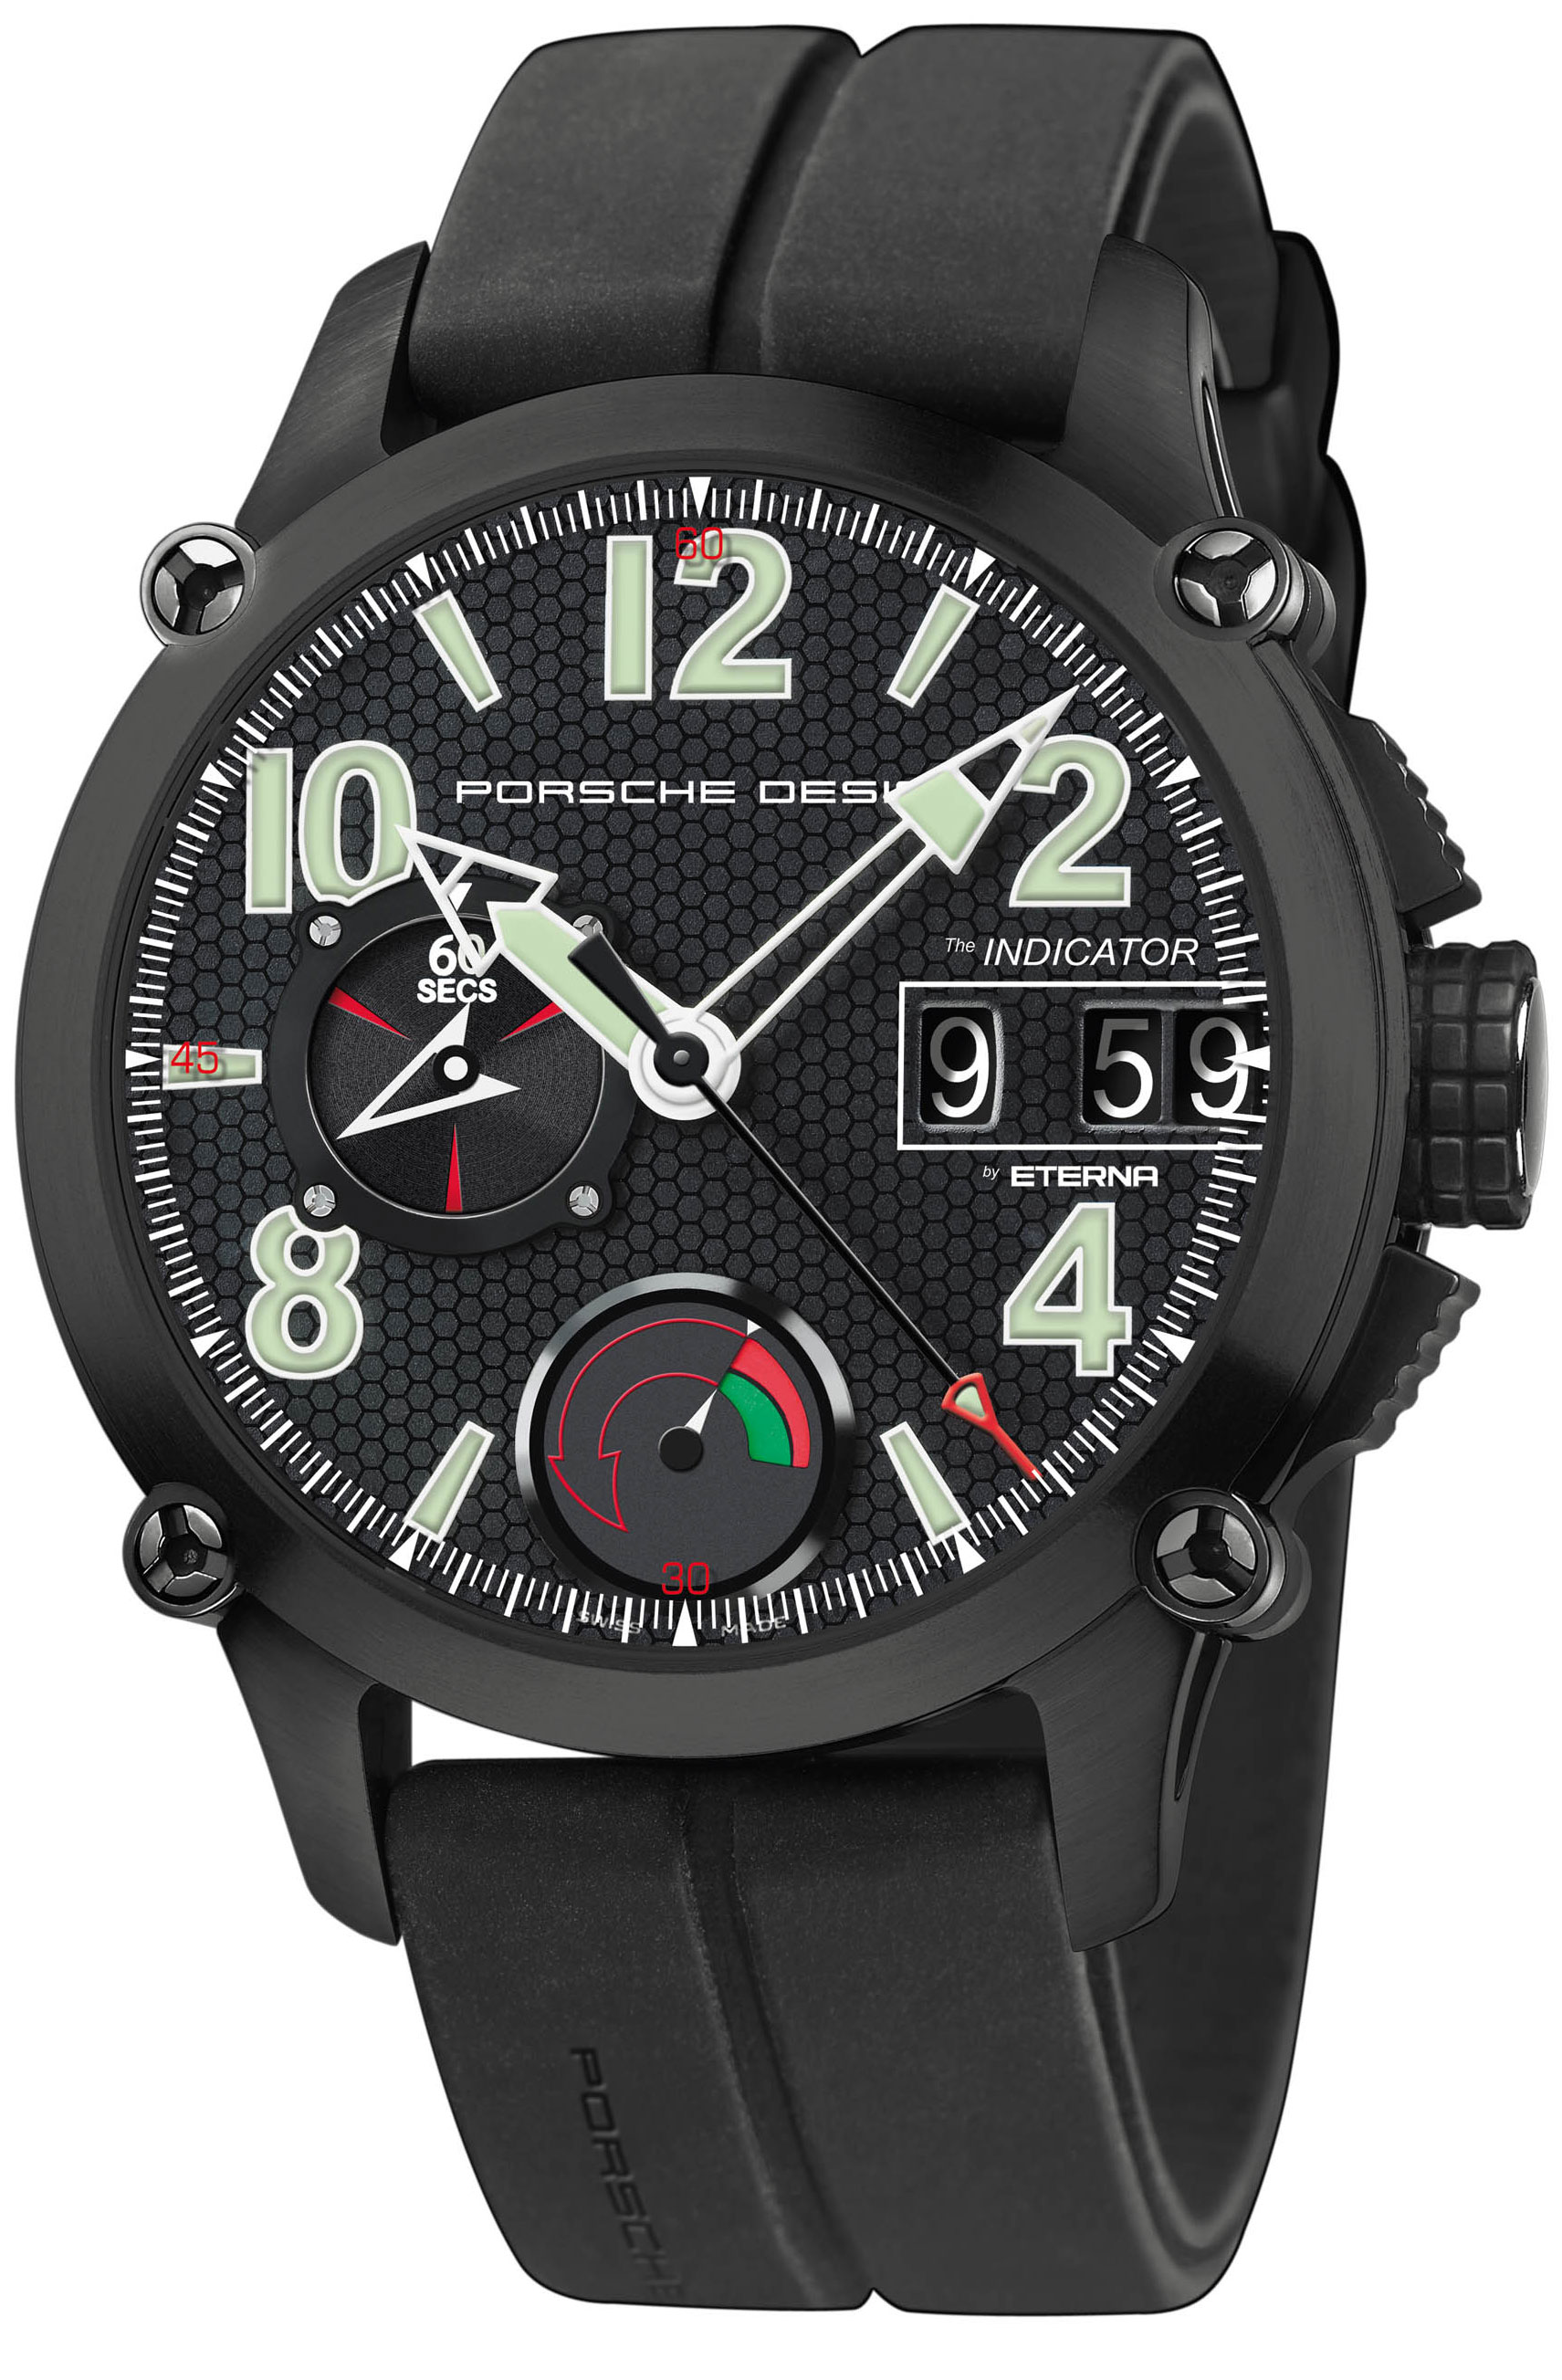 Review buy Porsche Design Indicator 6910.12.41.1149 watches